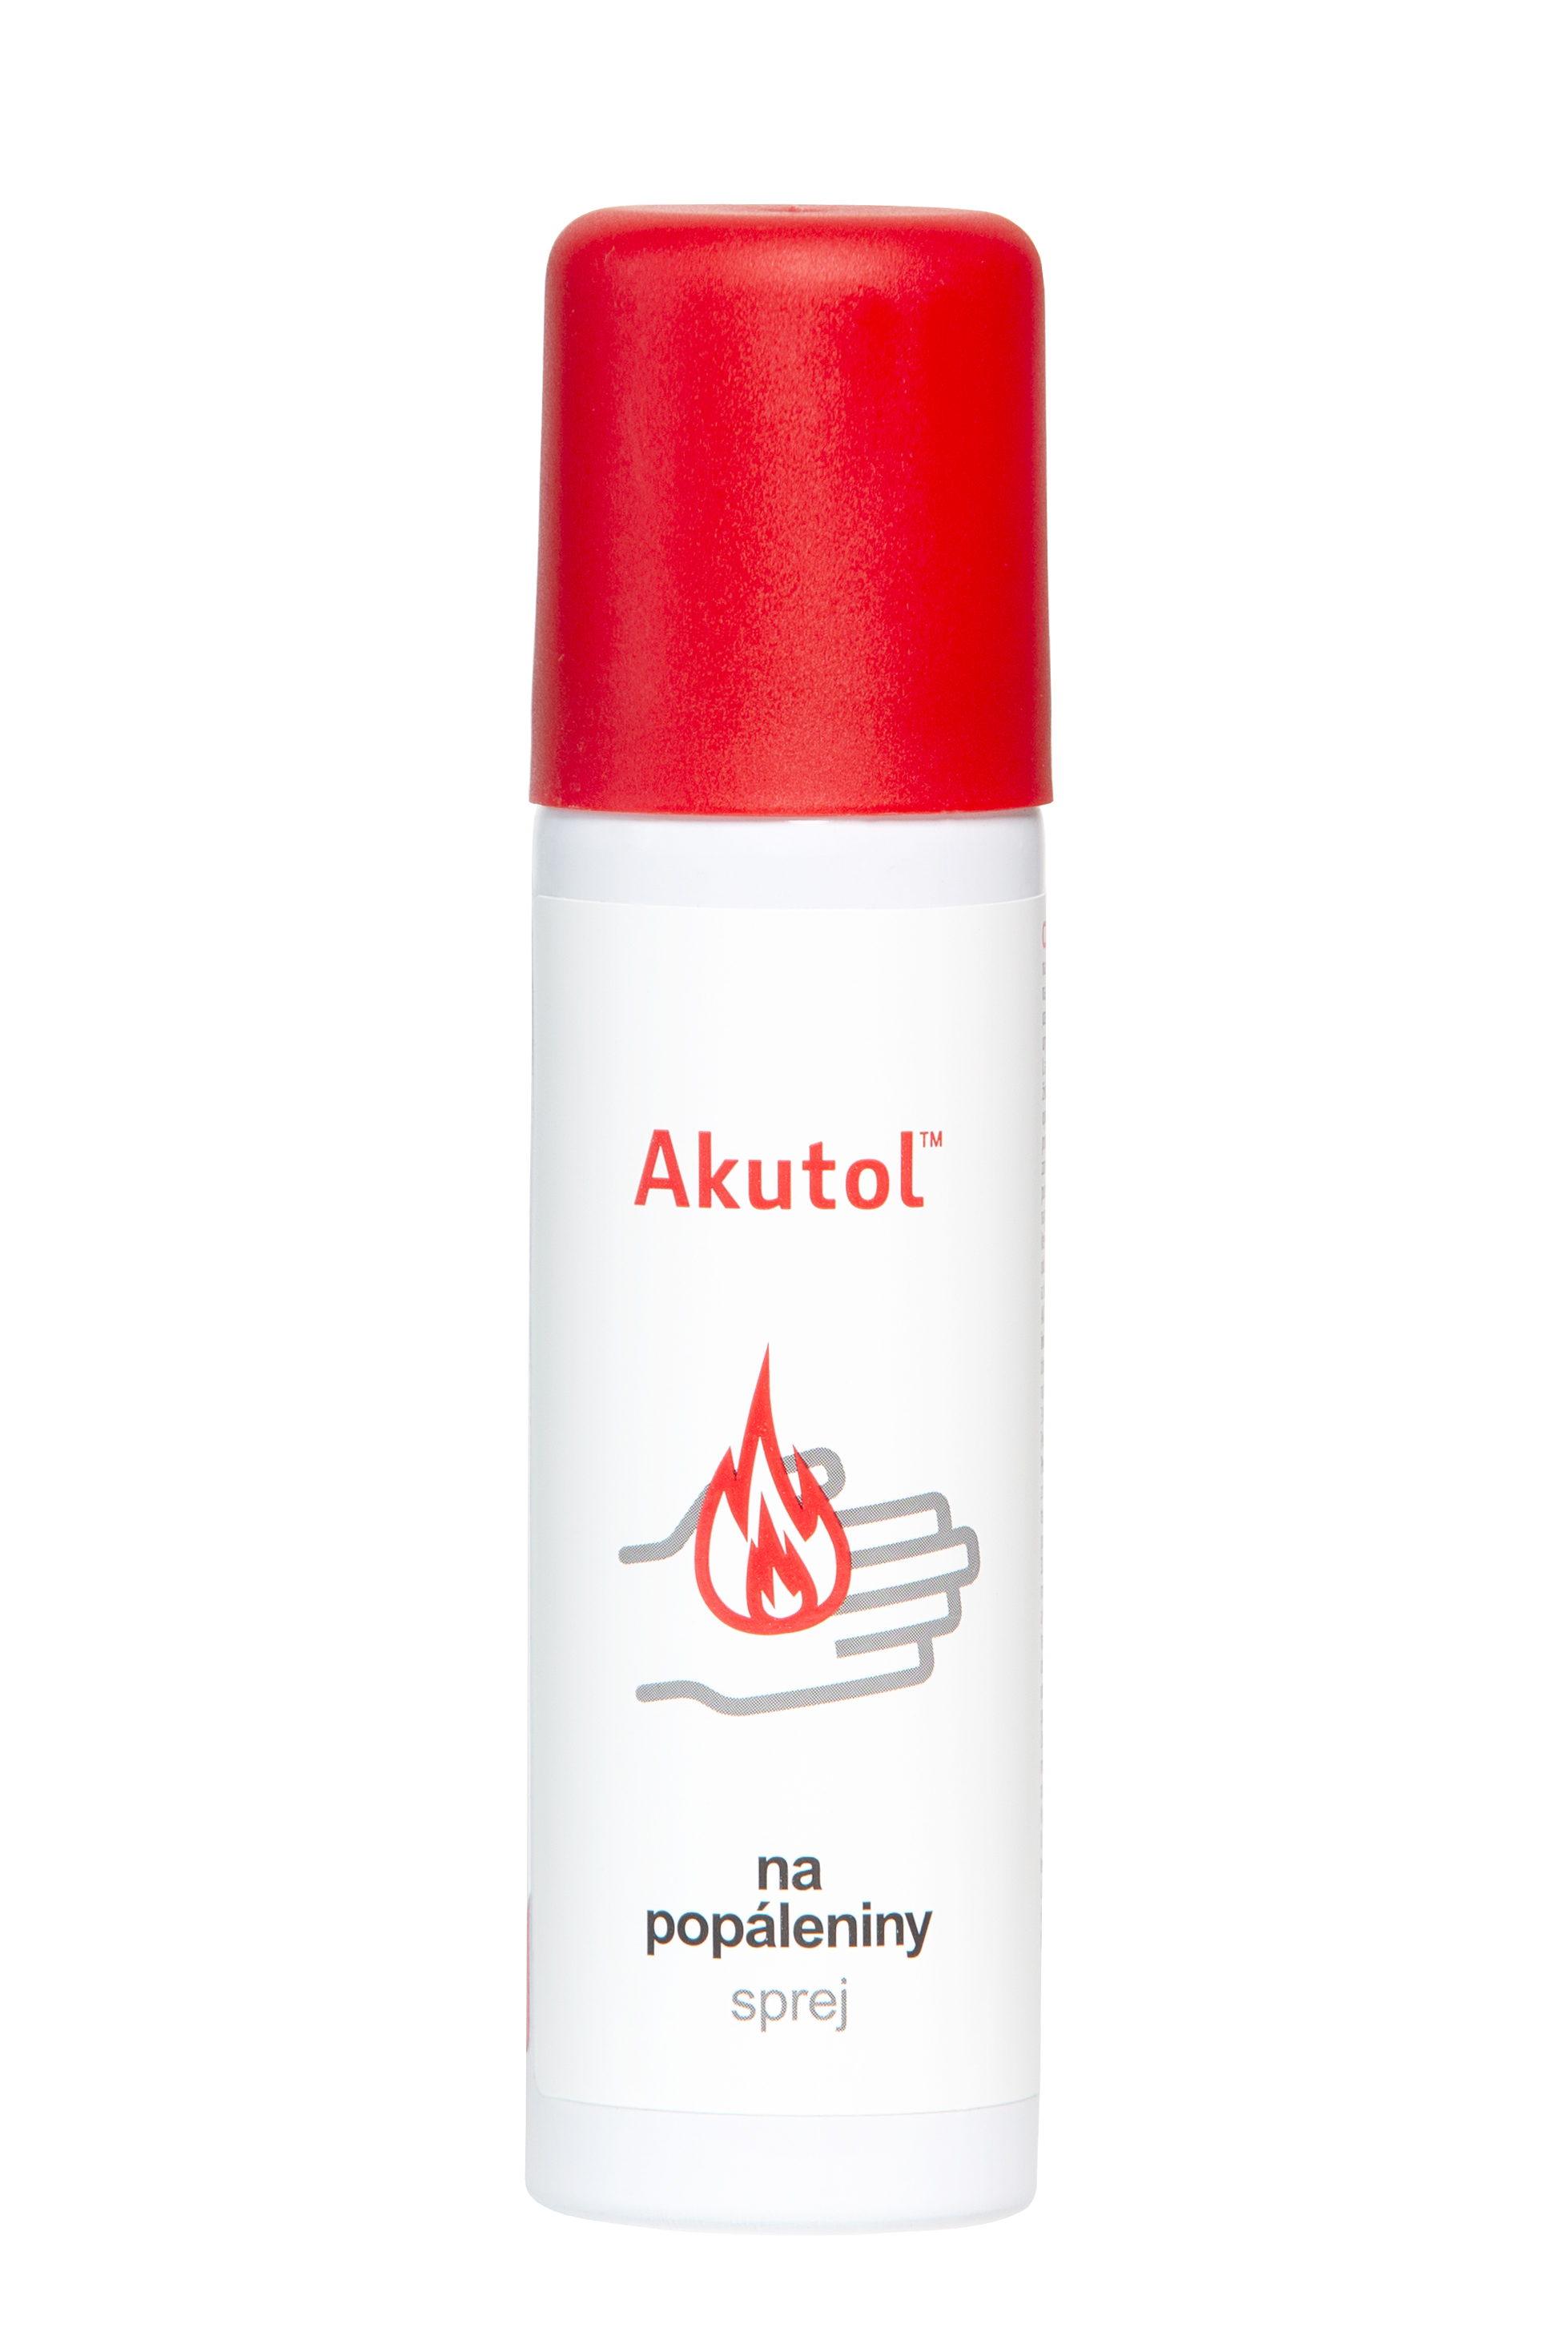 Akutol™ Spray for Burns